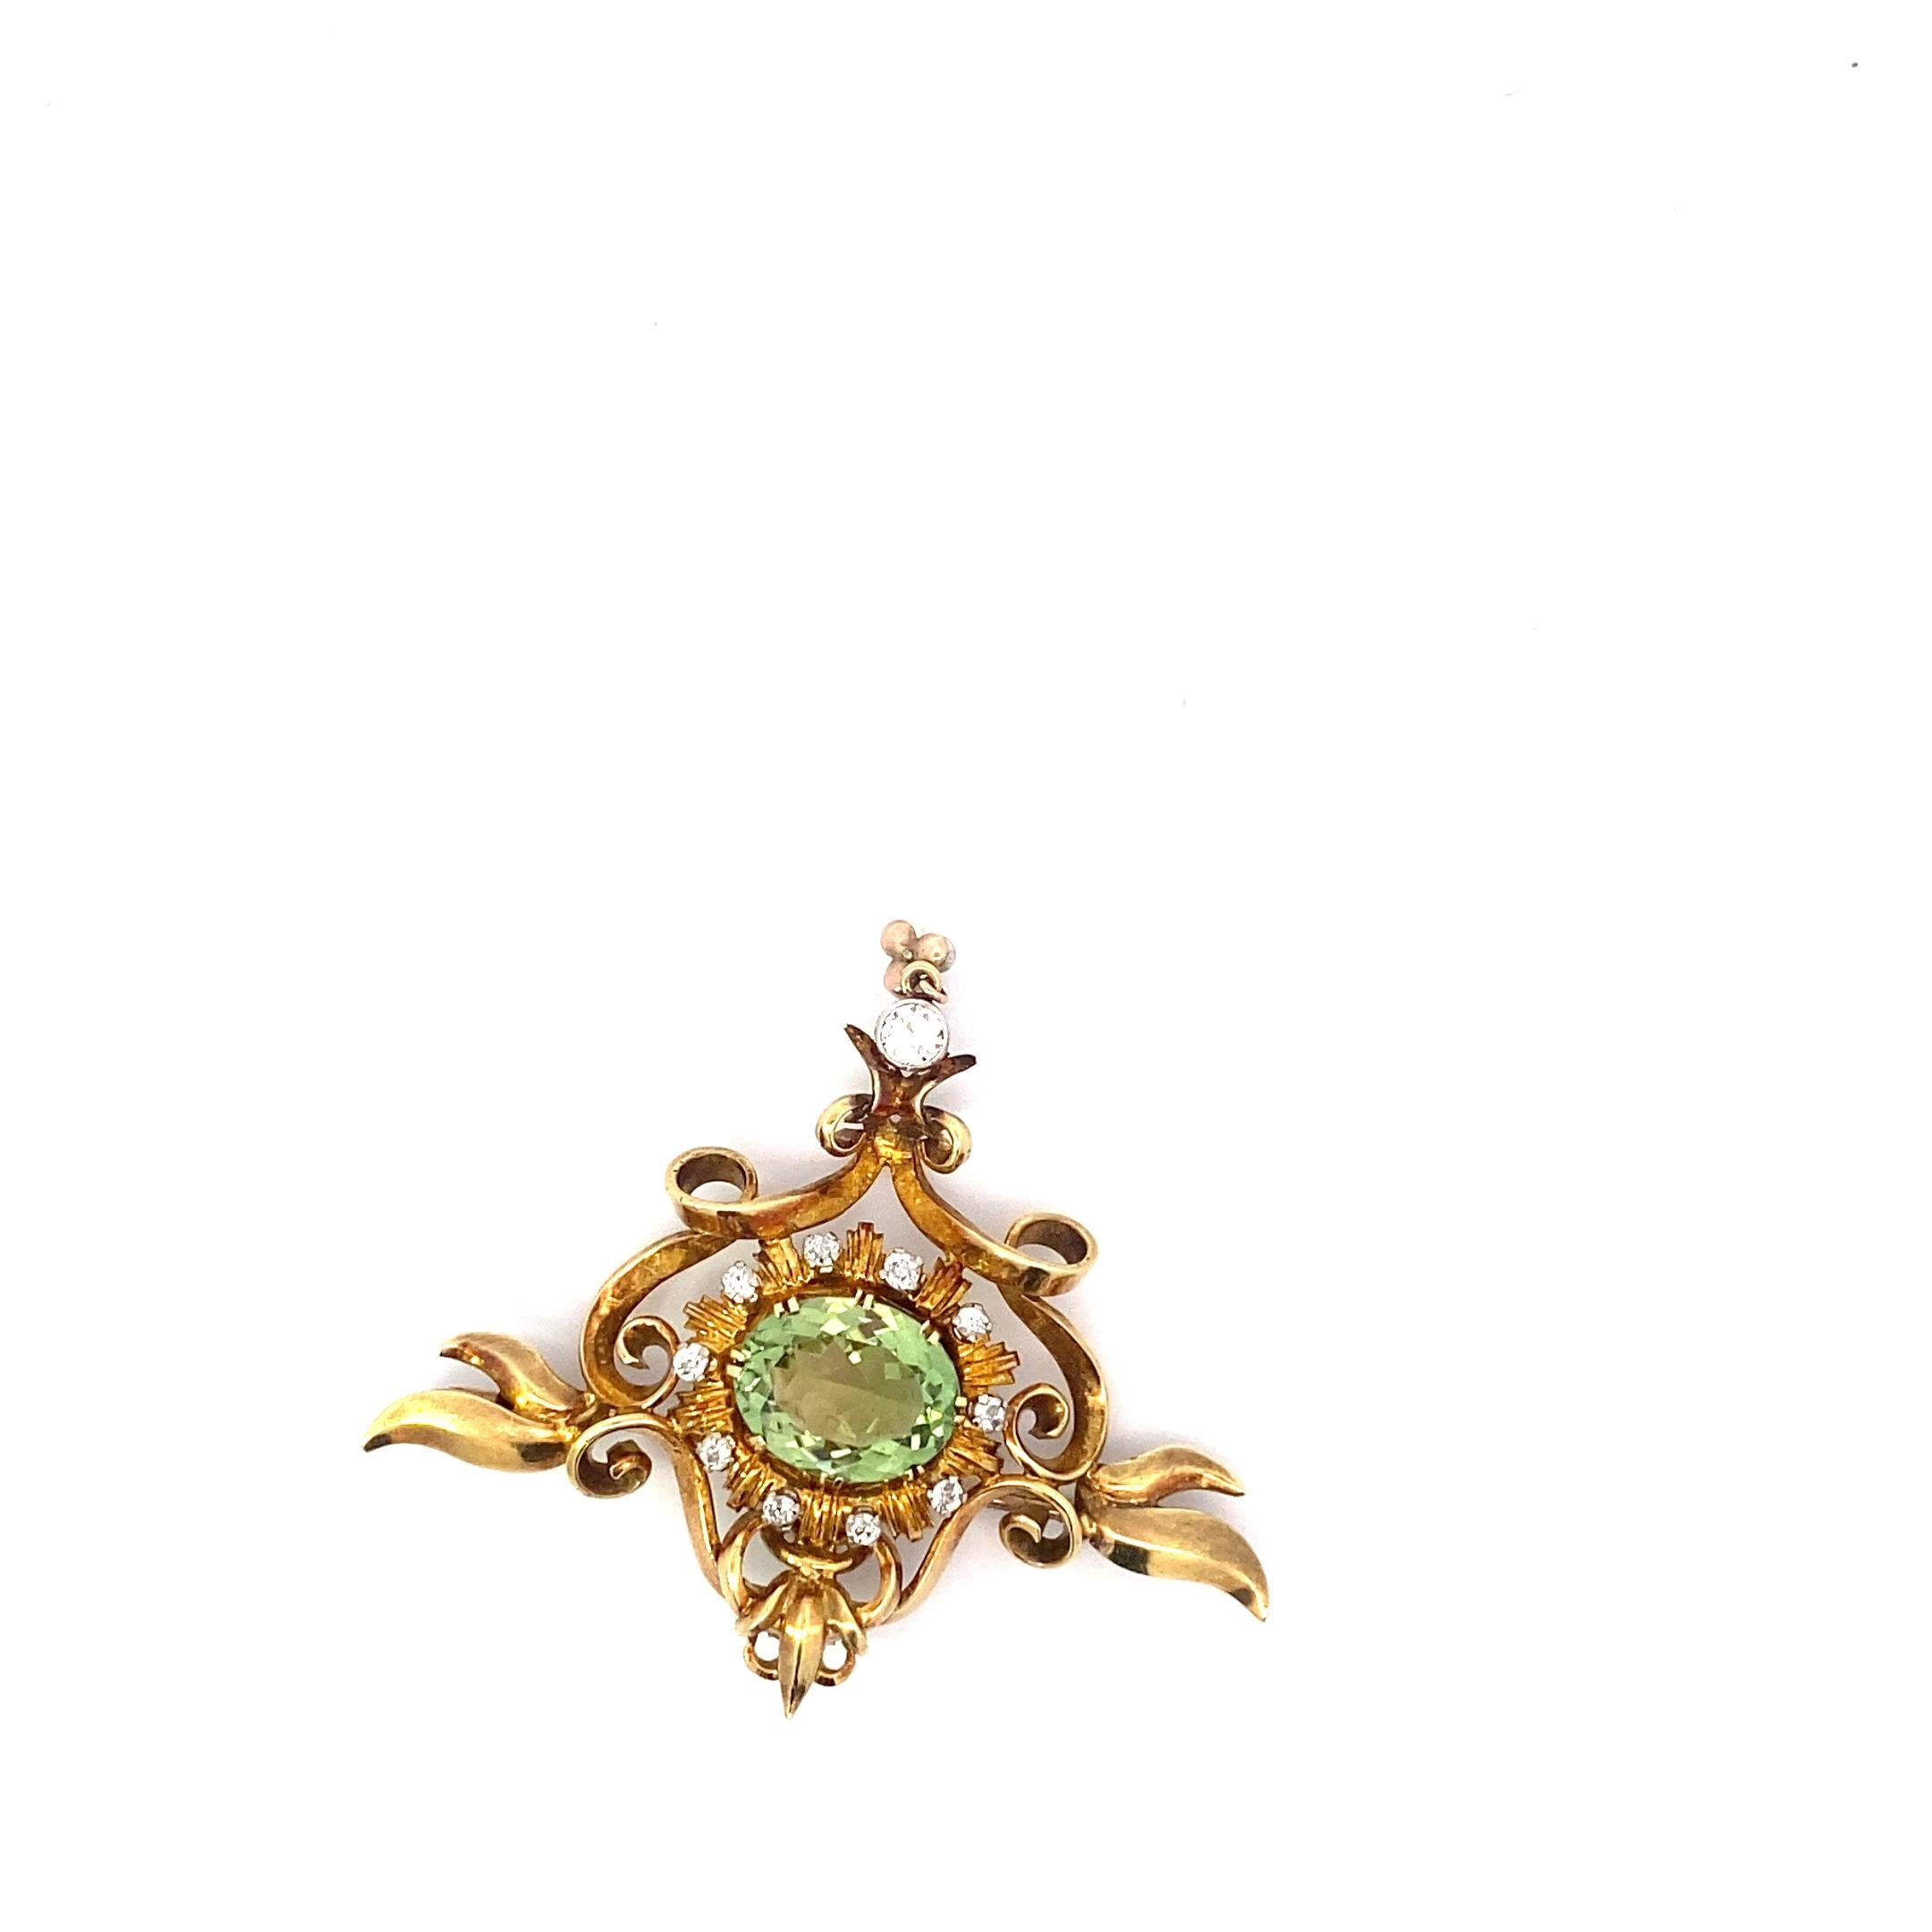 Brilliant Cut Antique Art Nouveau Brooch, Peridot, Diamonds, Seed Pearls  For Sale